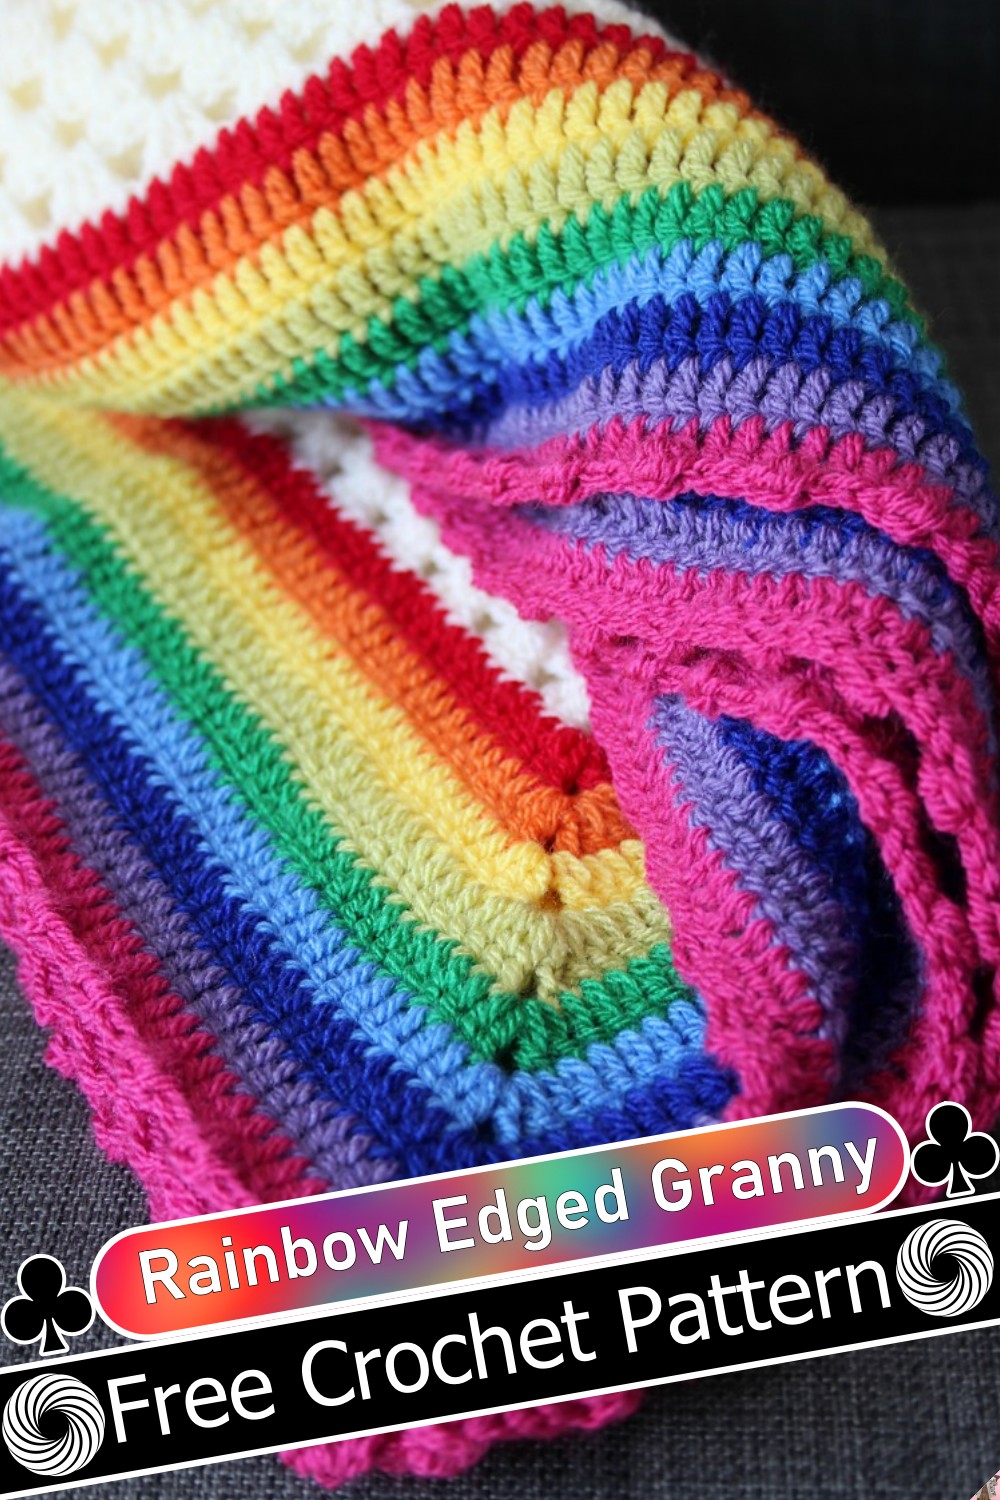 Rainbow Edged Granny